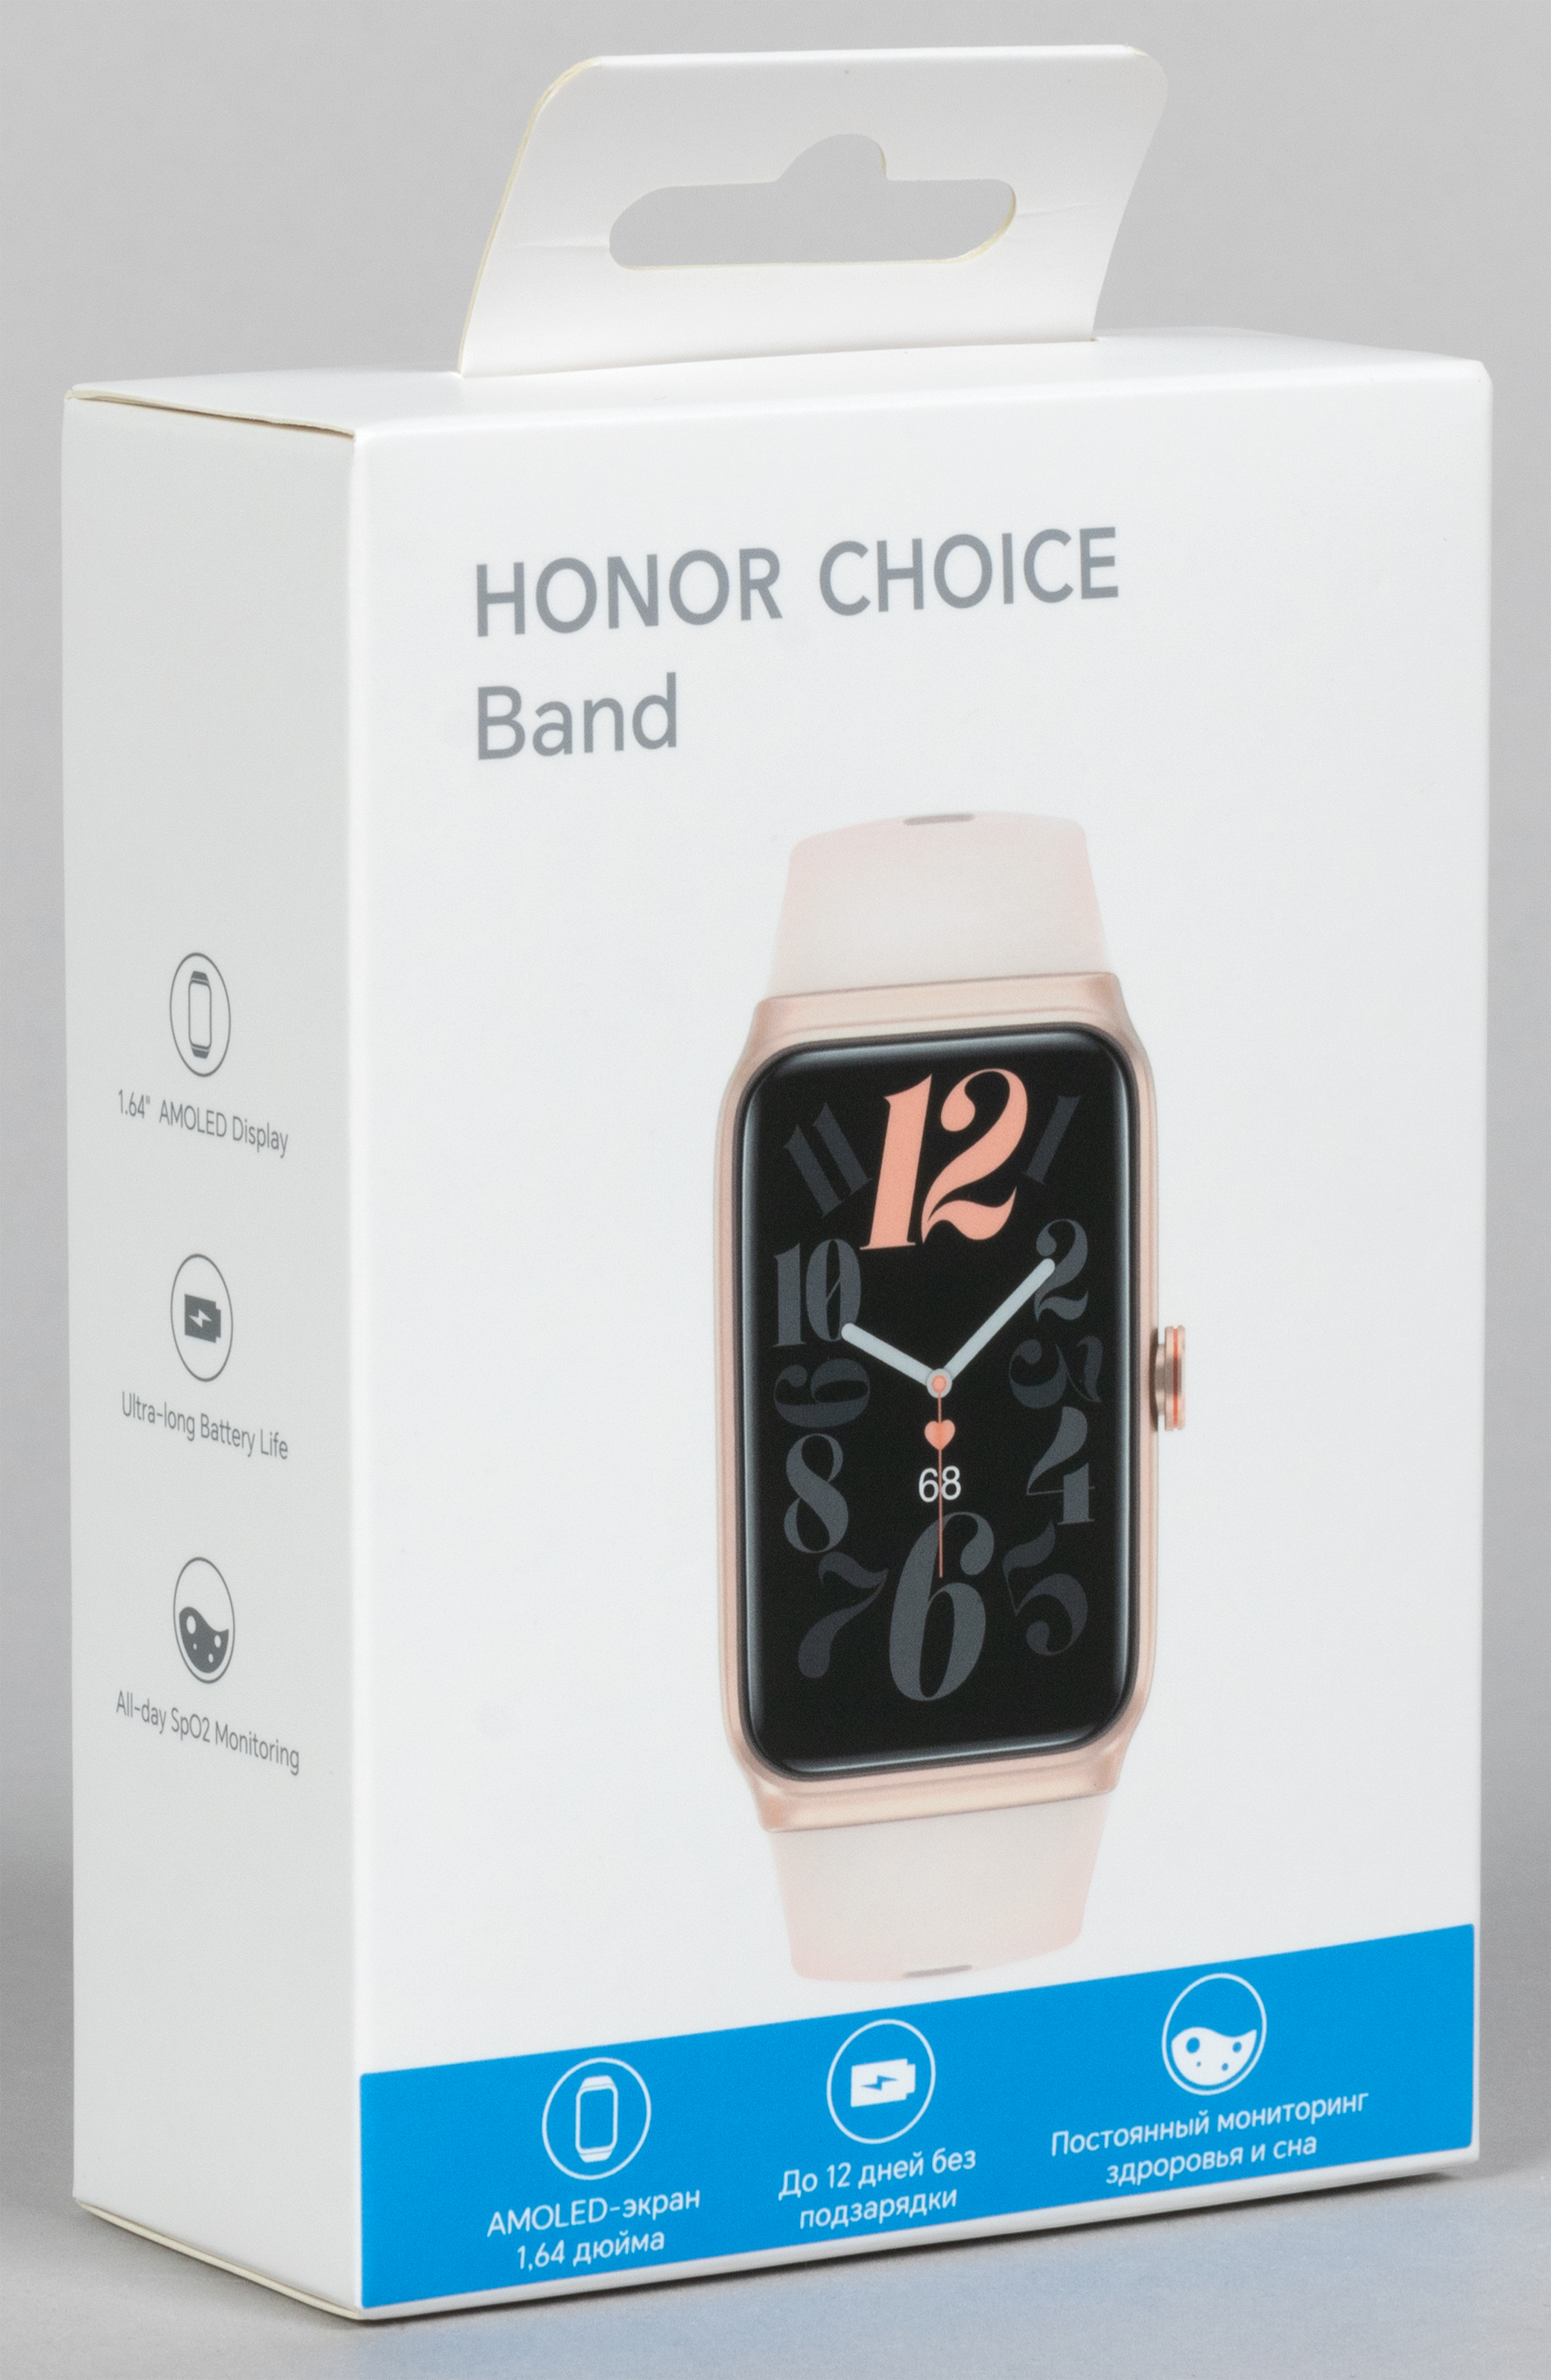 Honor choice band 8. Honor cois Band. Часы Honor choice Band. Honor choice Band белый. Honor choice Band обзор.